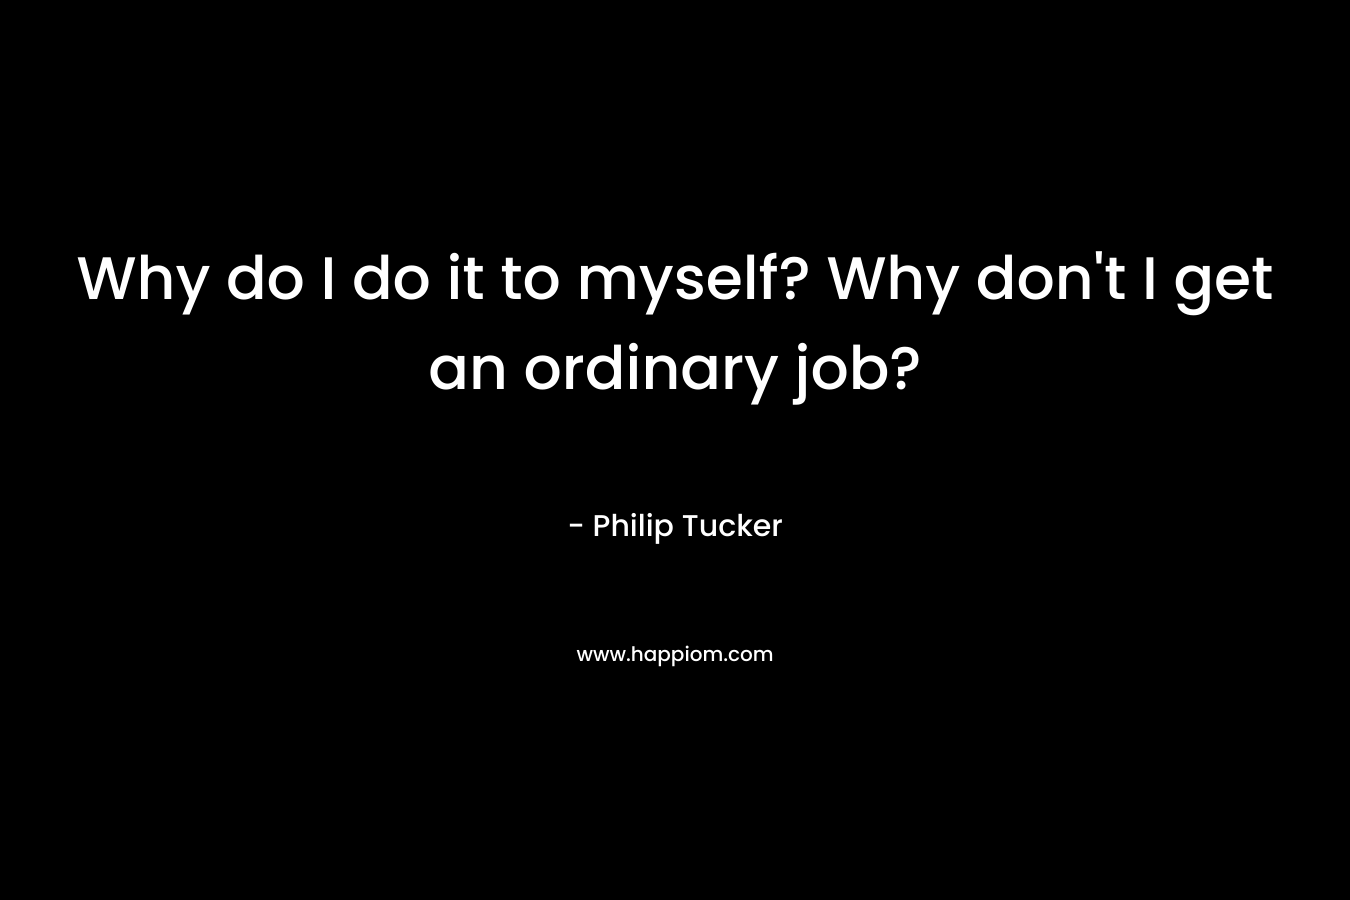 Why do I do it to myself? Why don't I get an ordinary job?